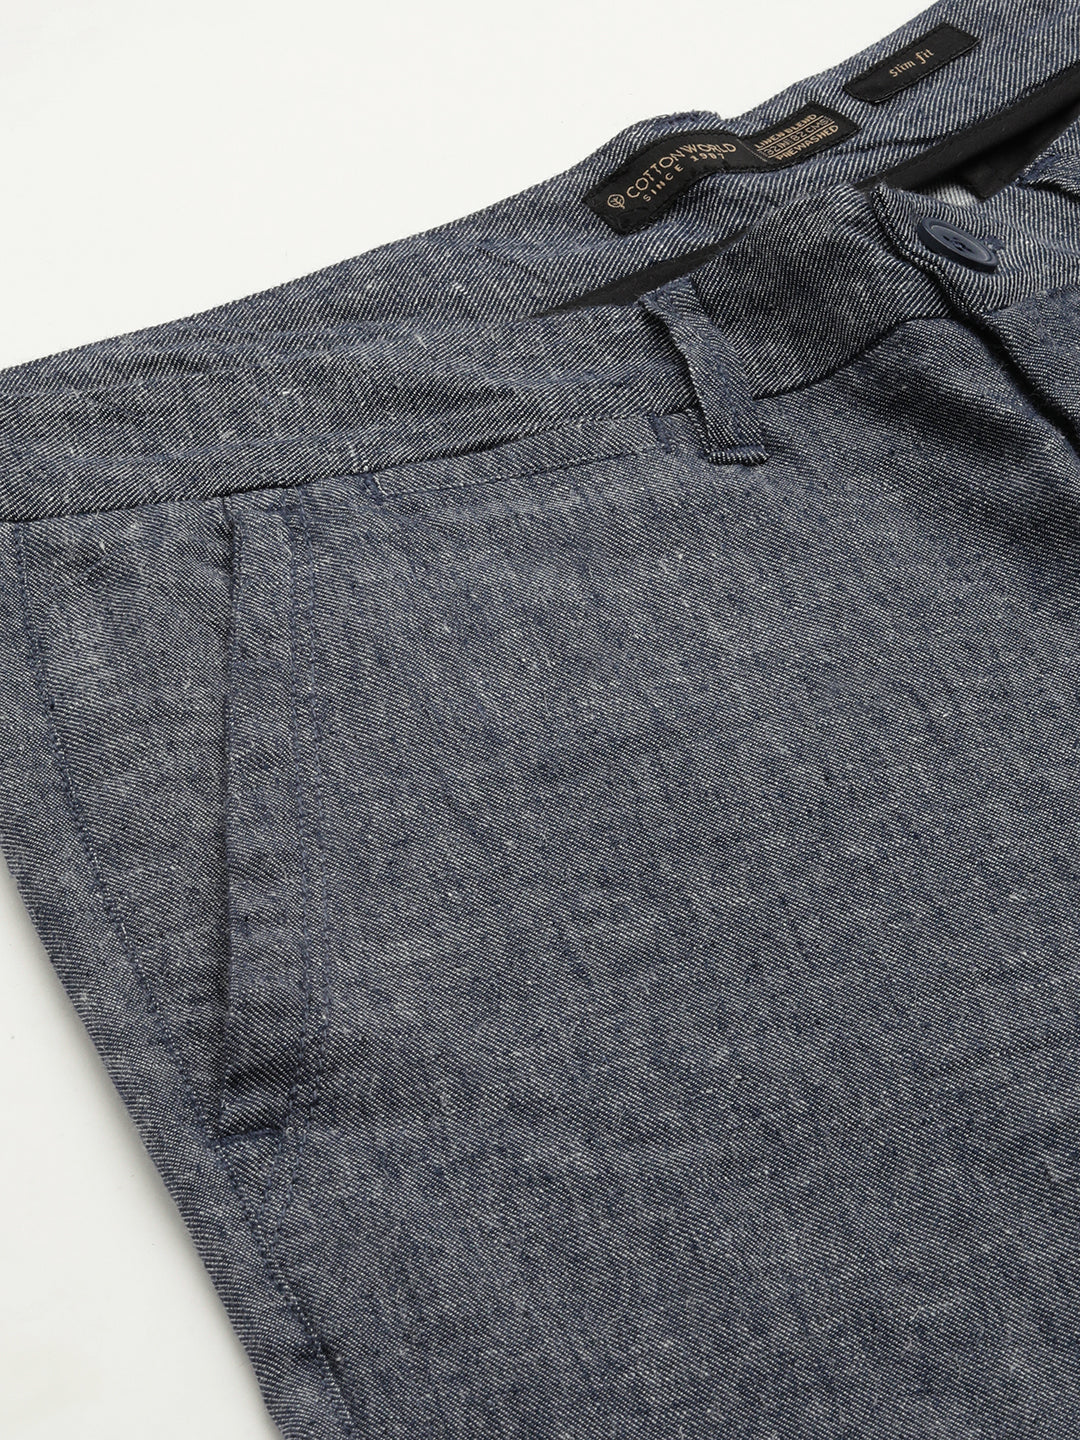 Buy Men's Cotton Linen Casual Wear Regular Fit Pants|Cottonworld